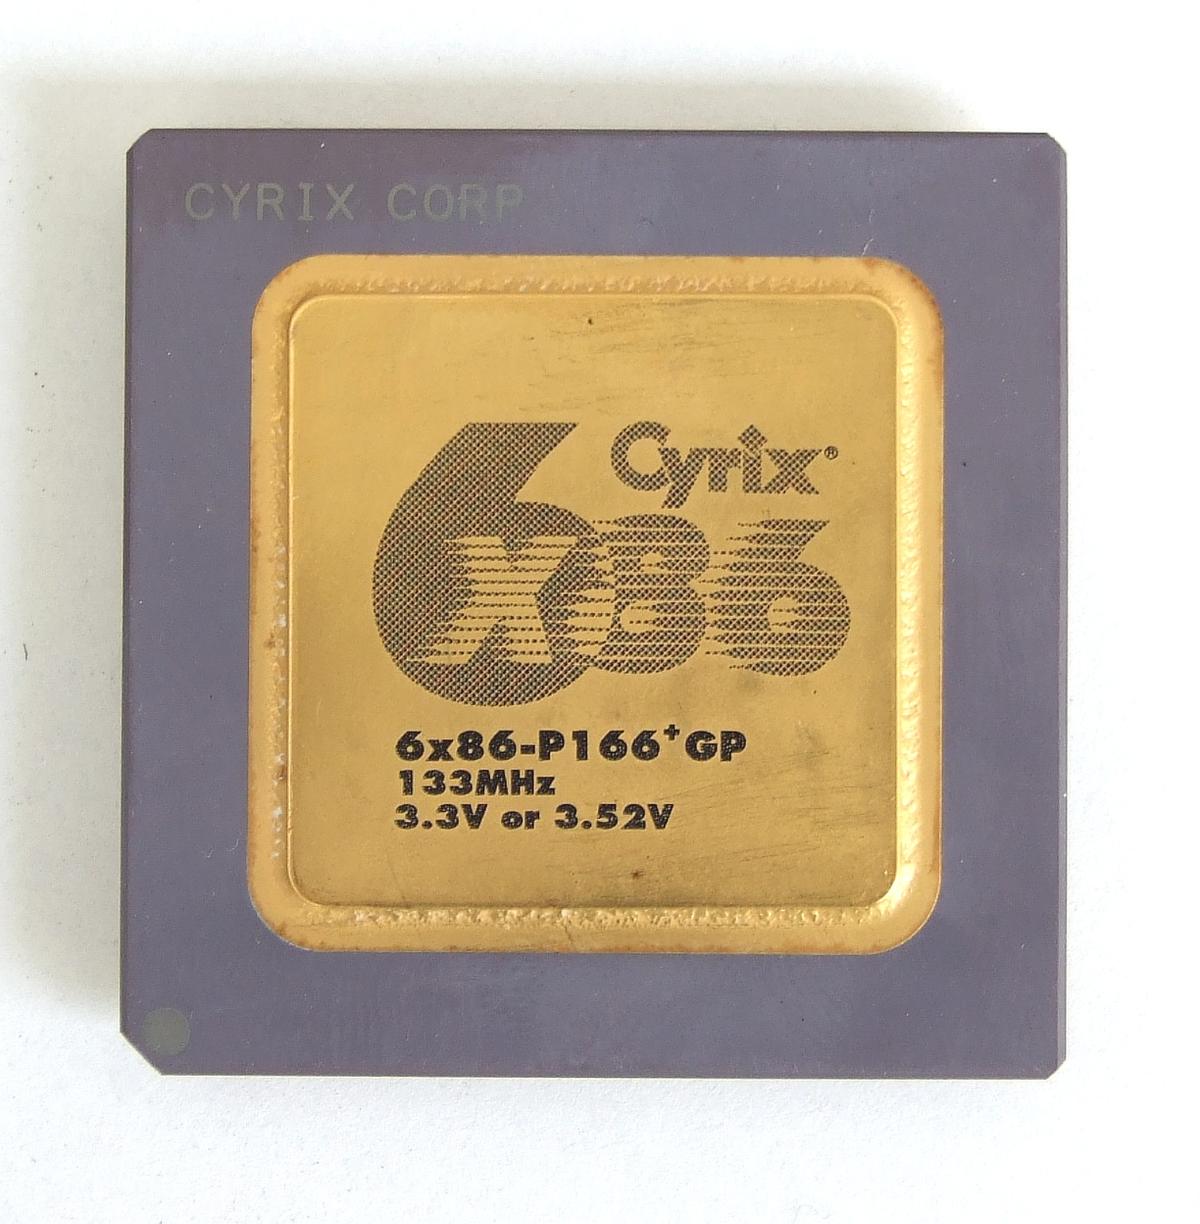 cyrix procesory historia class="wp-image-928274" 